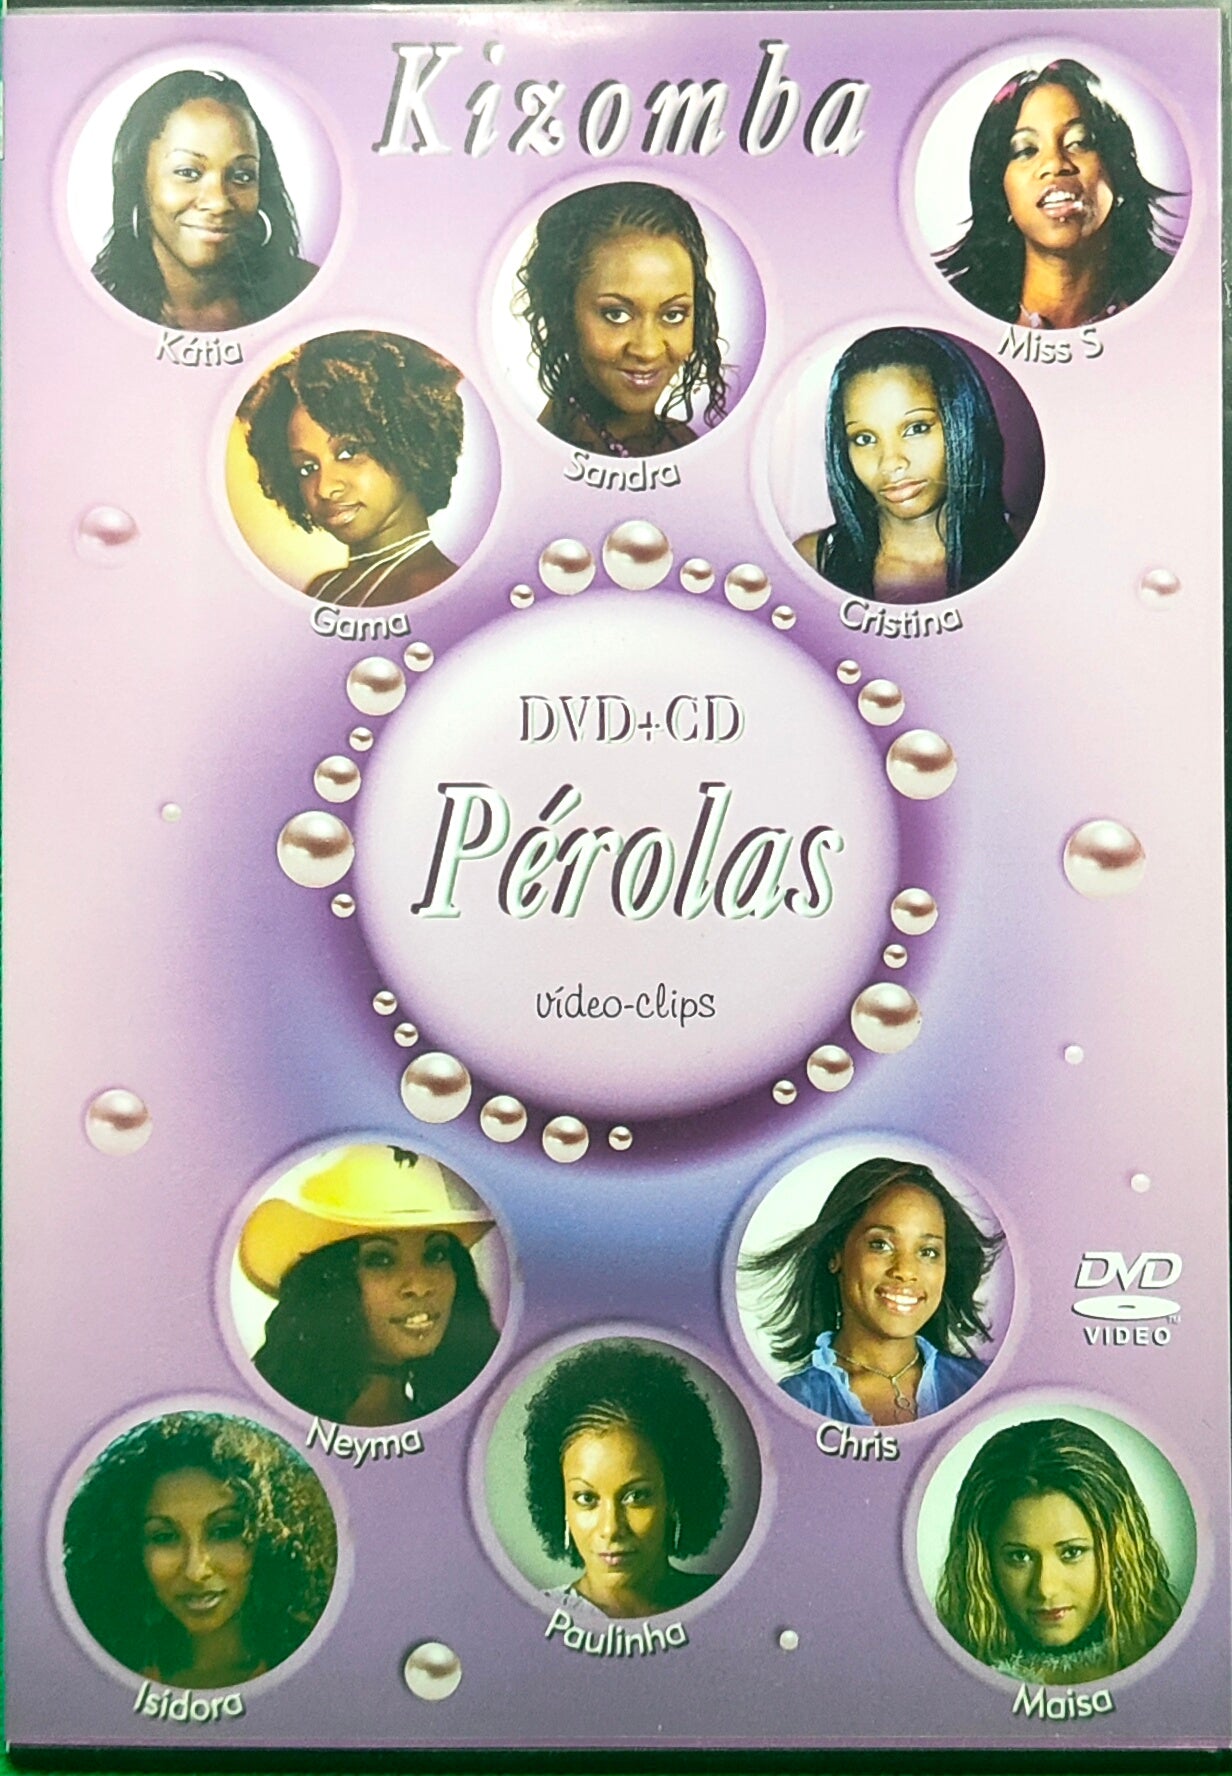 KIZOMBAS "PÉROLAS" (KÁTIA;GAMA;SANDRA;CRISTINA;MISS S;NEYMA;ISIDORA;PAULINHA;CHRIS;MAISA)